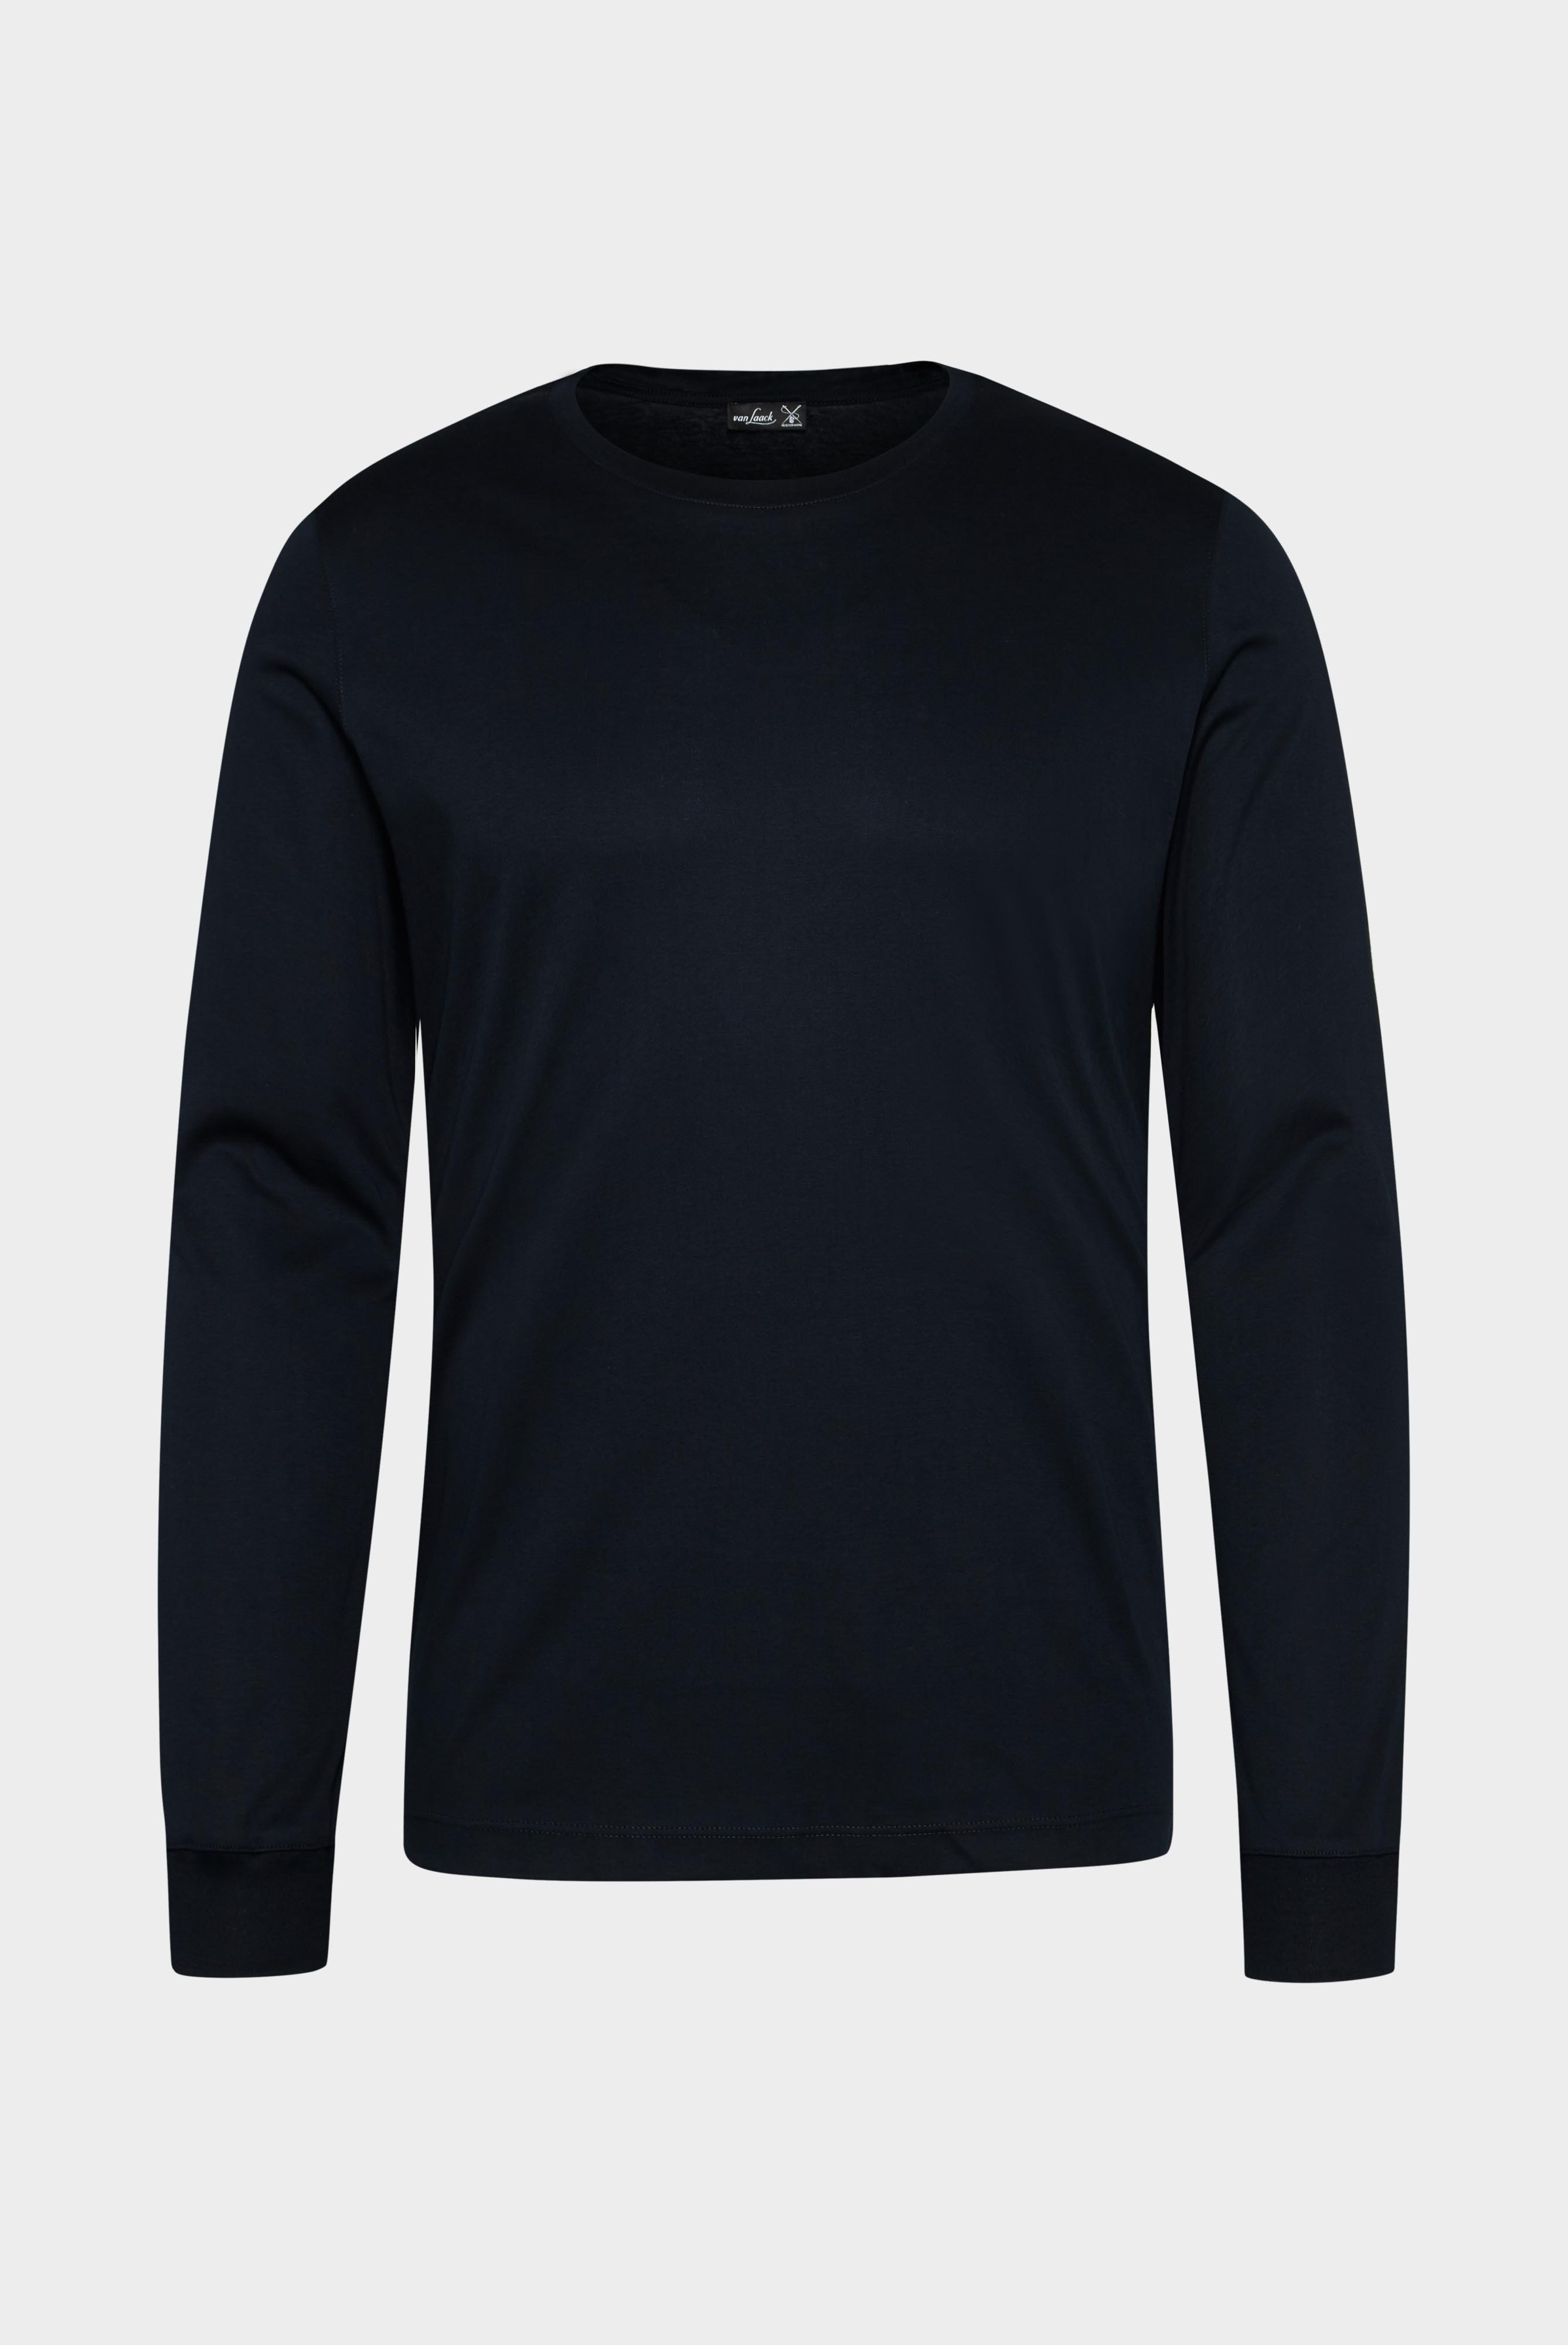 T-Shirts+Longsleeve Swiss Cotton Jersey Crew Neck T-Shirt+20.1718.UX.180031.790.X3L